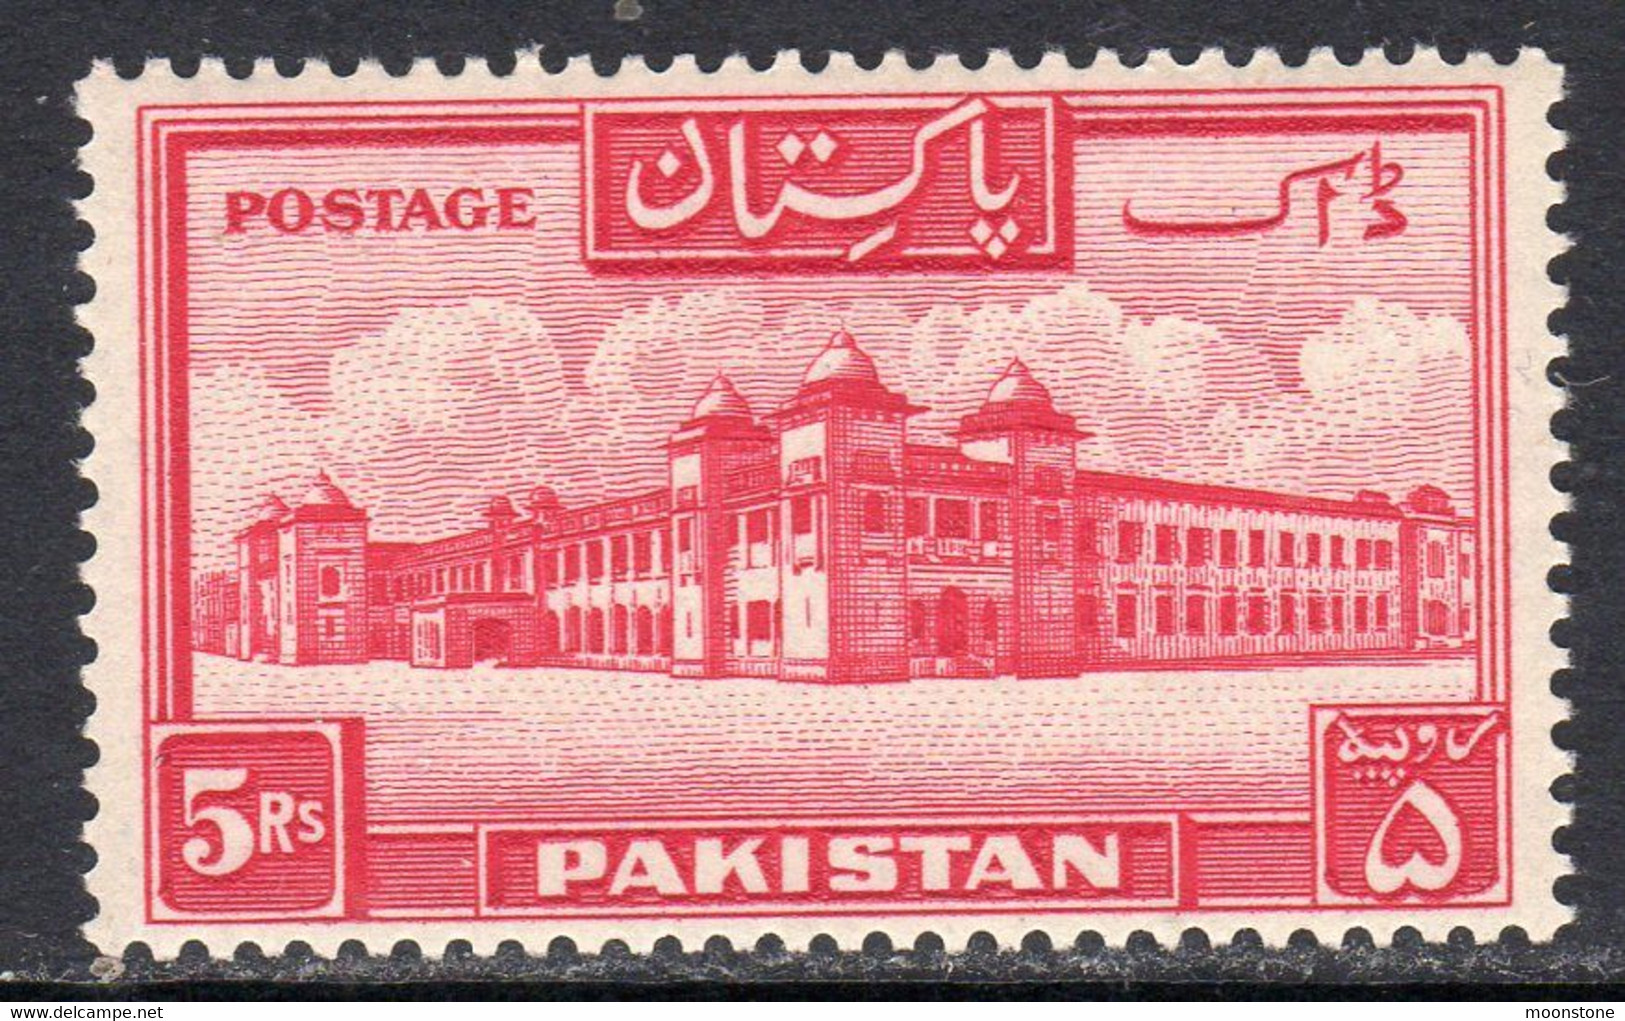 Pakistan 1948 5 Rupees Carmine Definitive, Perf. 14, MNH, SG 40 (E) - Pakistan